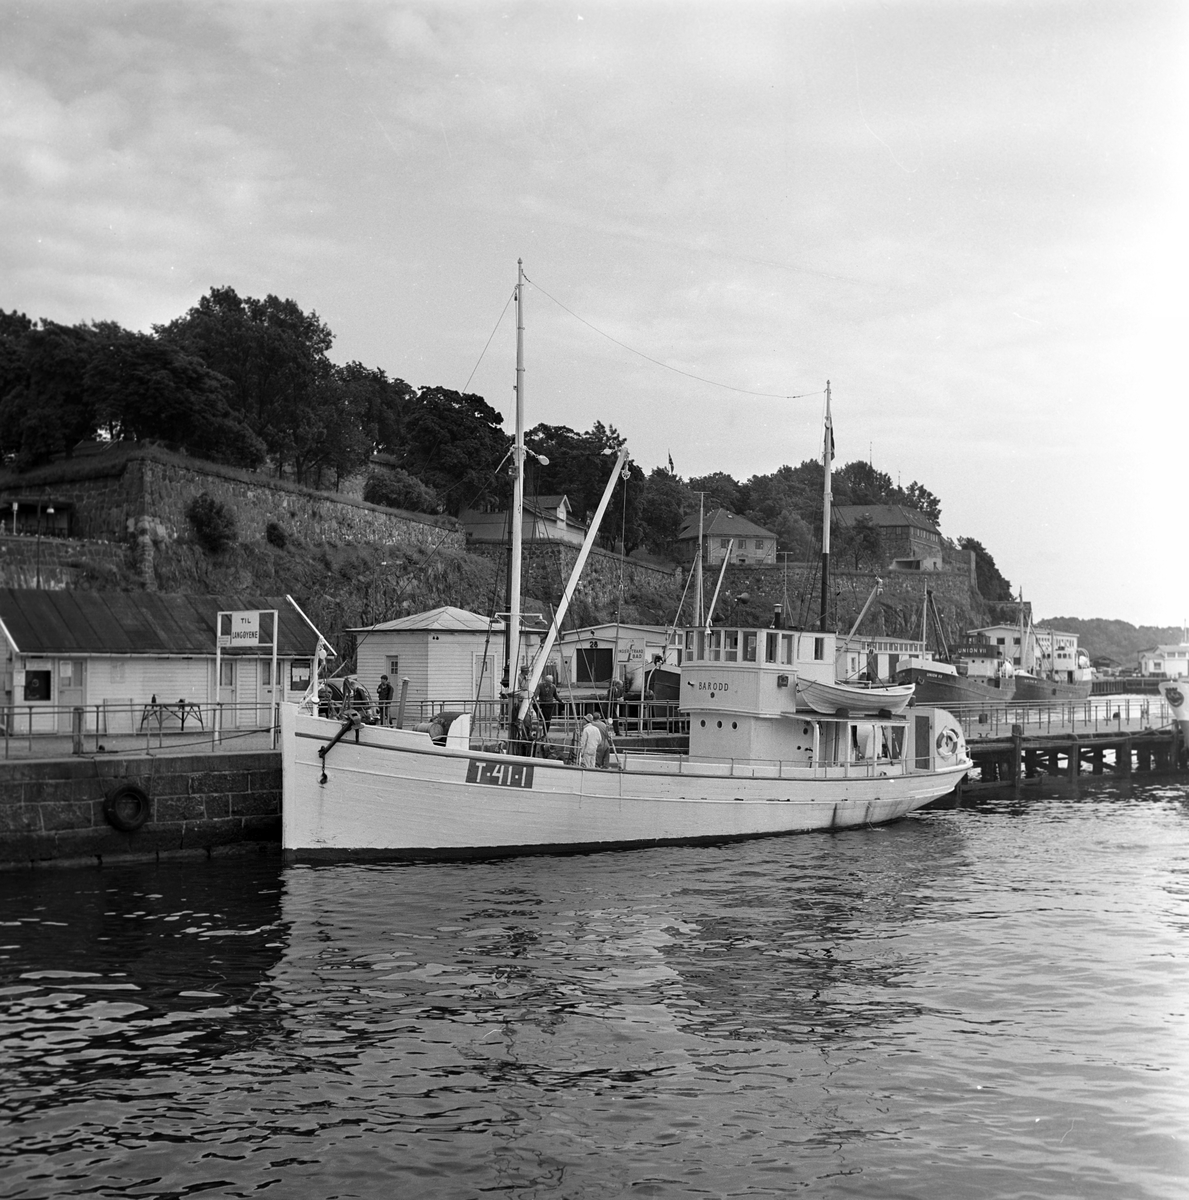 Serie. Fiskeskøyta "Barodd" på sightseeing. Fotografert 14. juni 1961.